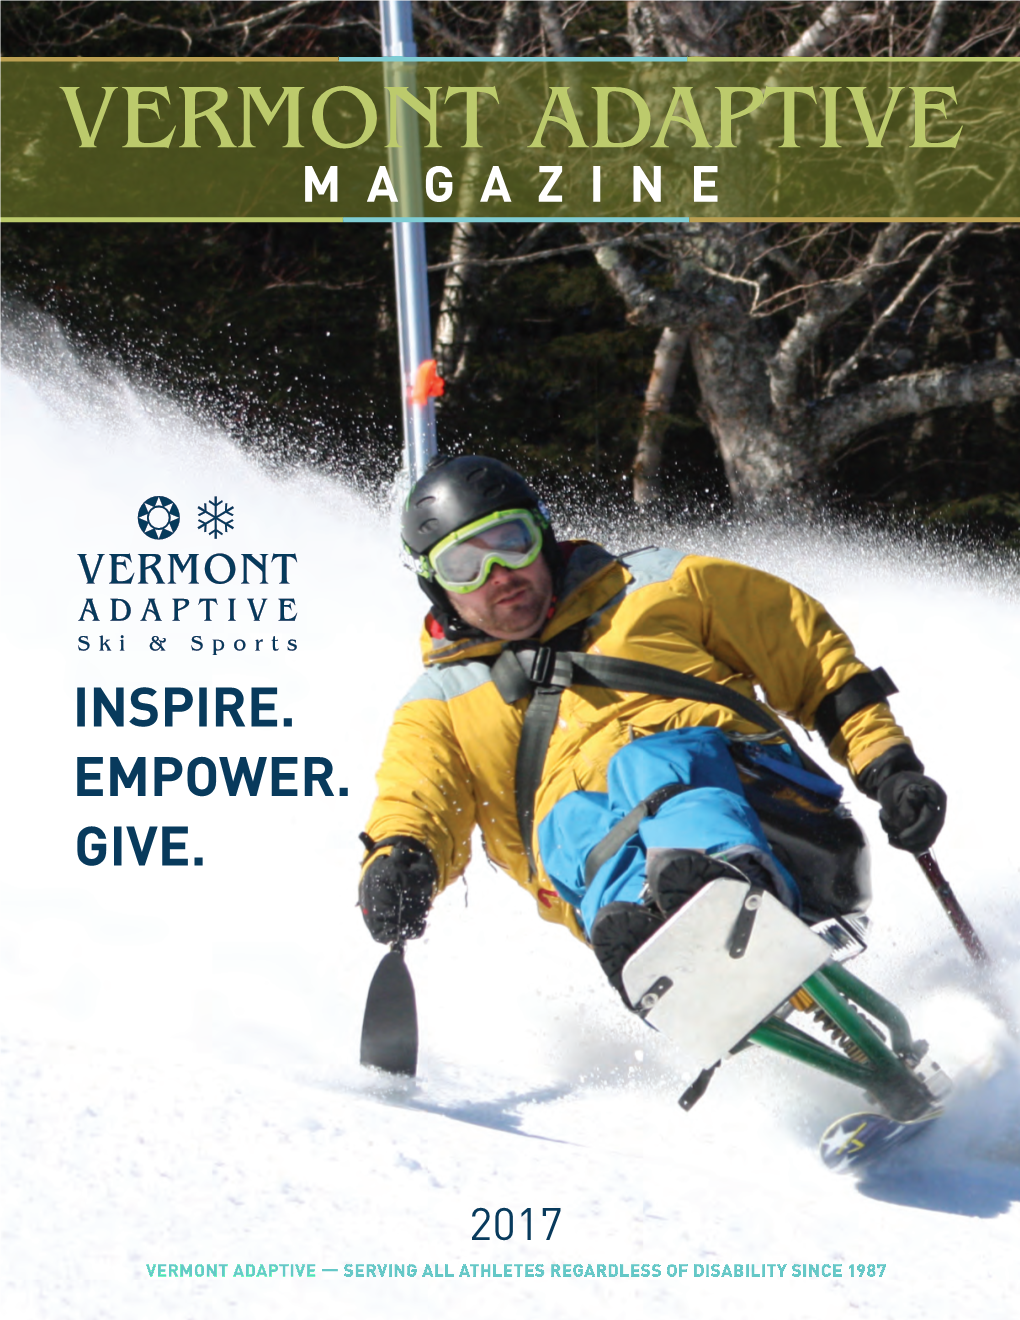 Vermont Adaptive Ski & Snowboard Team